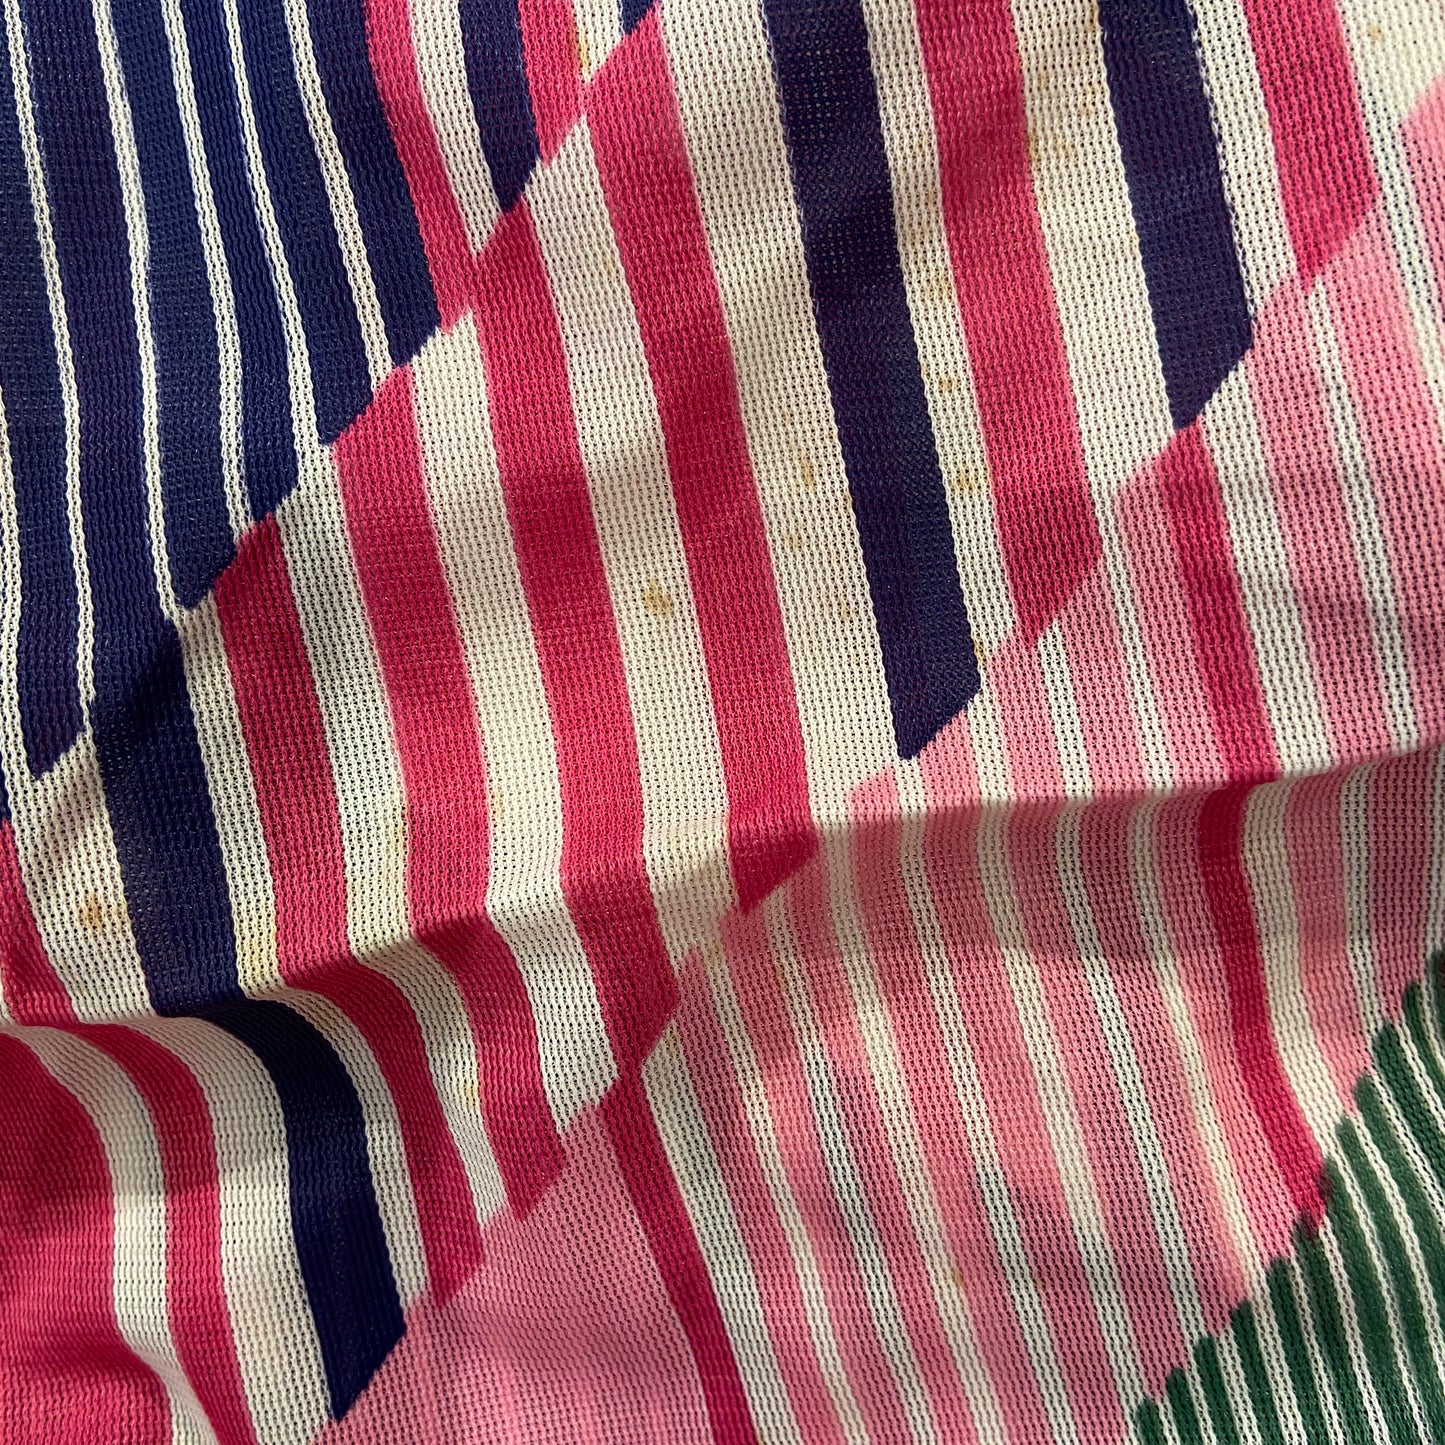 NYLON Retro Fabric Bright Stripes AWESOME Dress Shirt